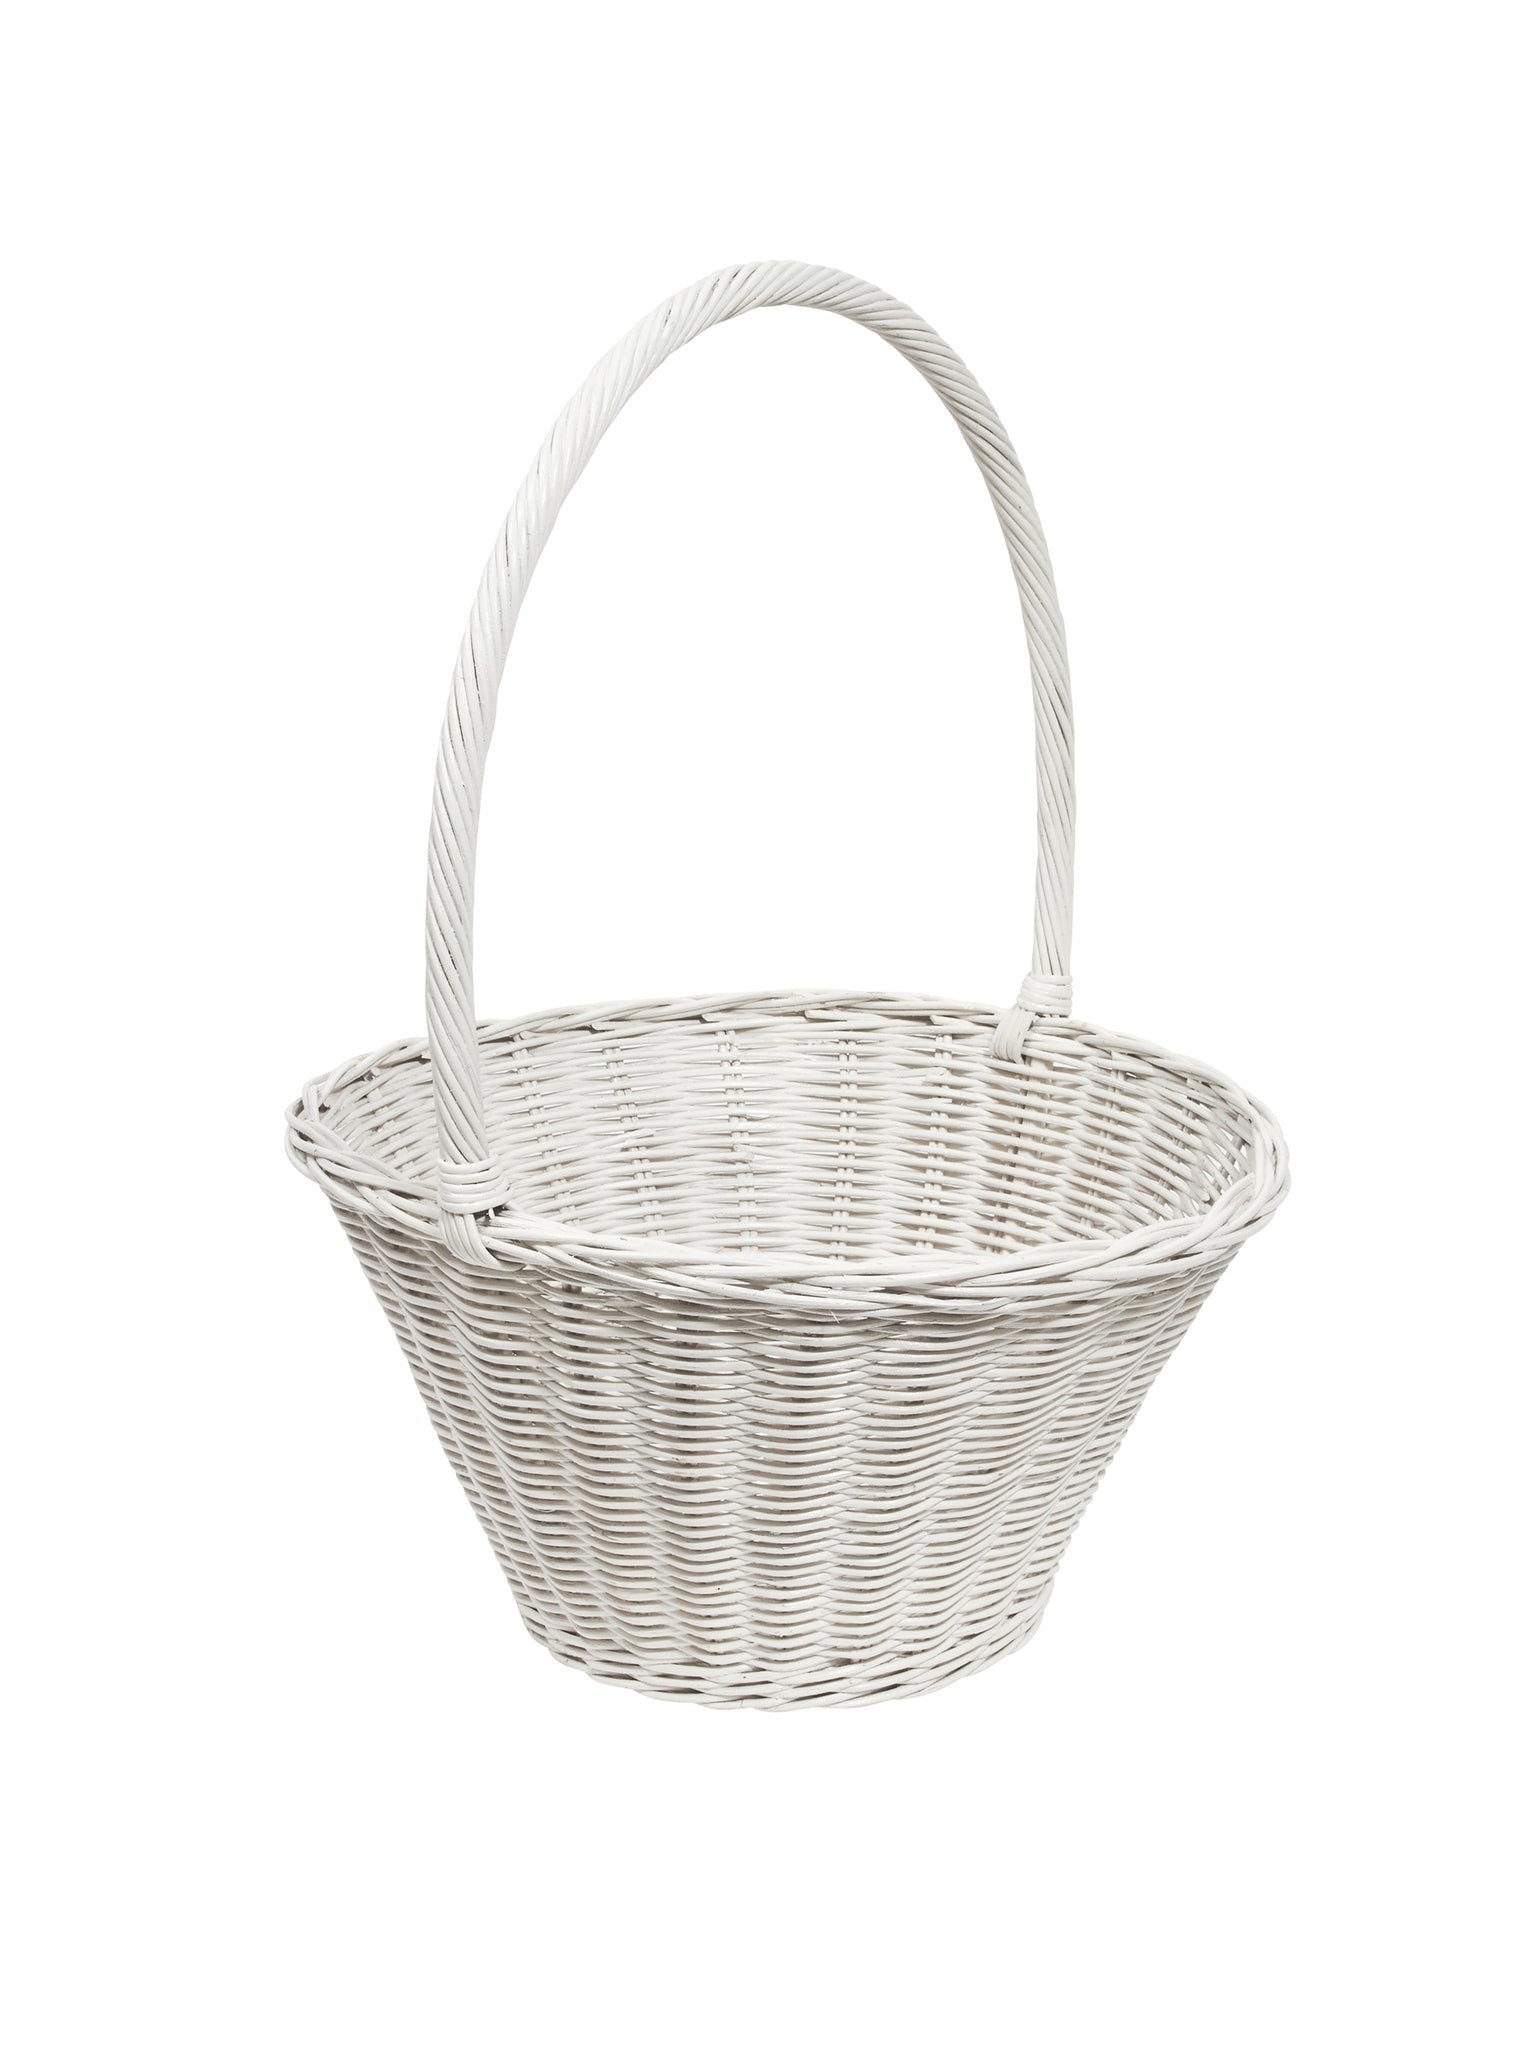 Wicker Easter Basket Large White Weston Table